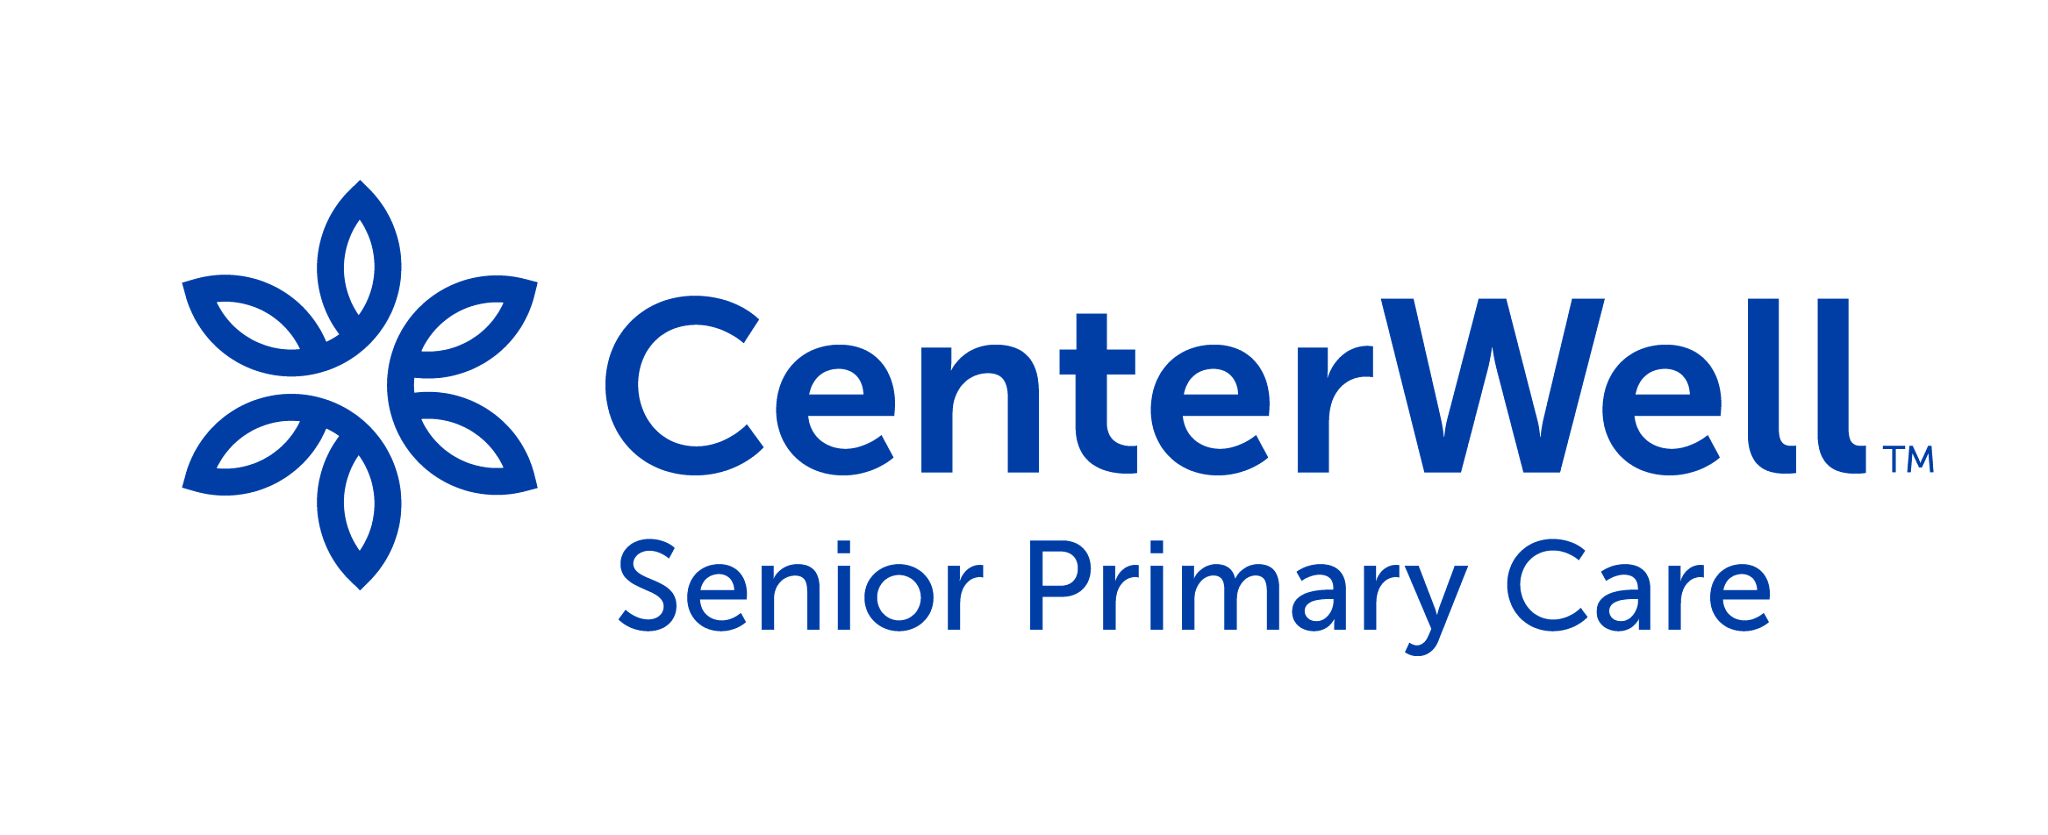 Centerwell Senior Primary Care Logo